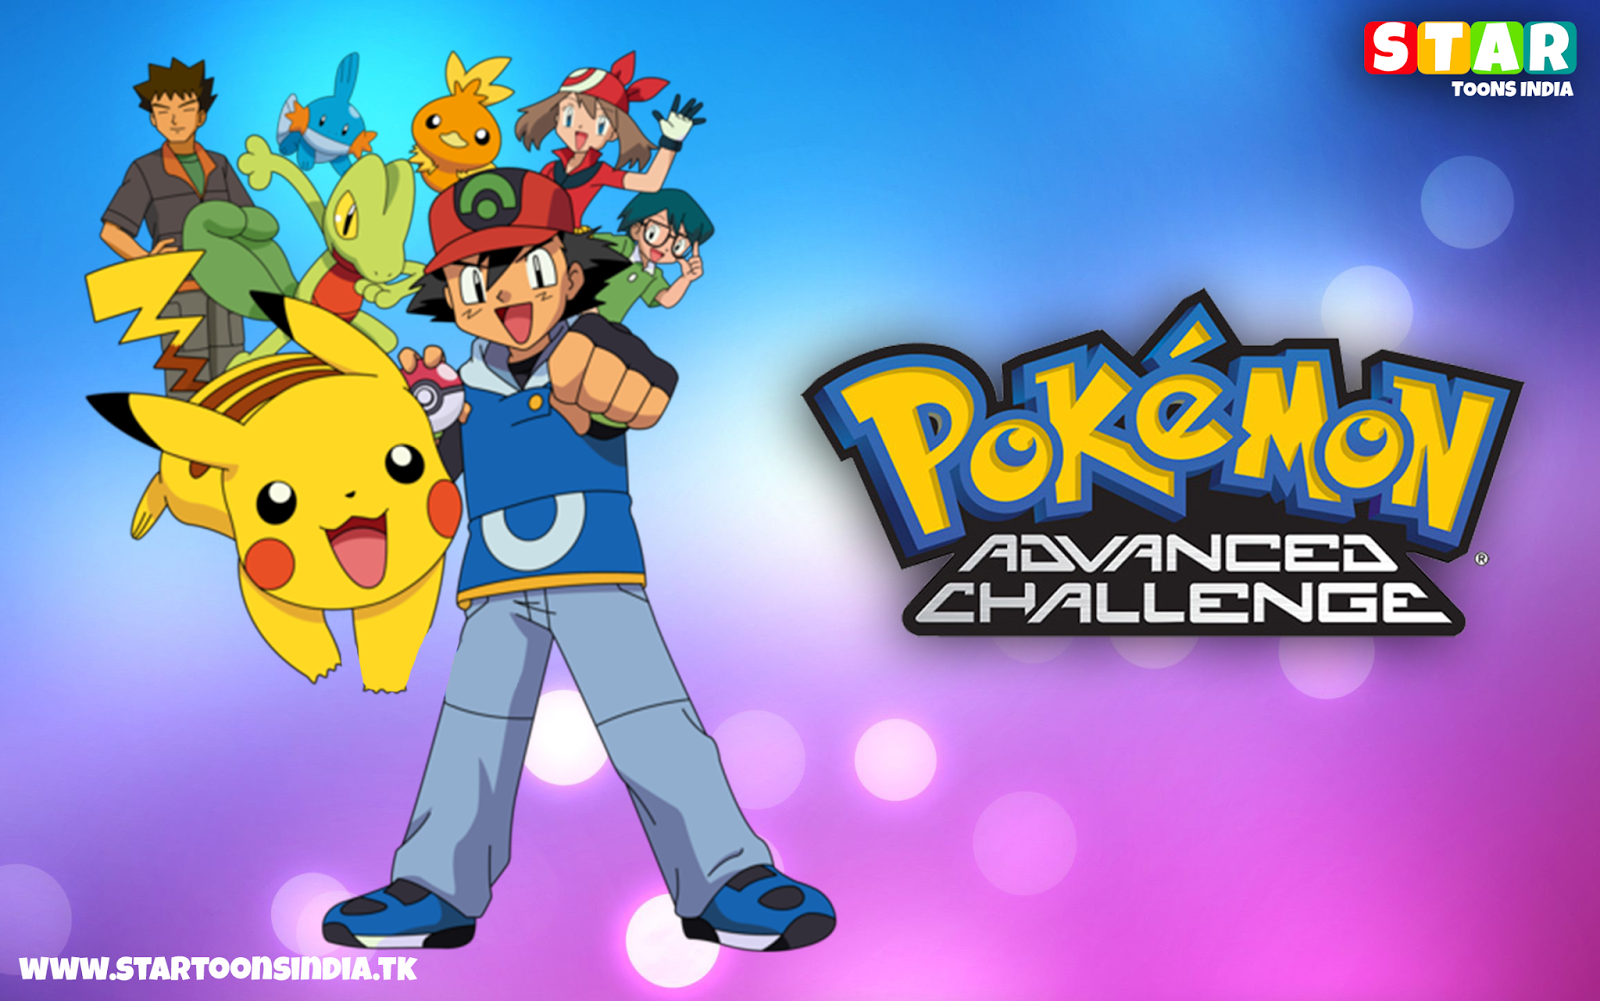 Pokémon: Advanced Challenge Episodes in Hindi.